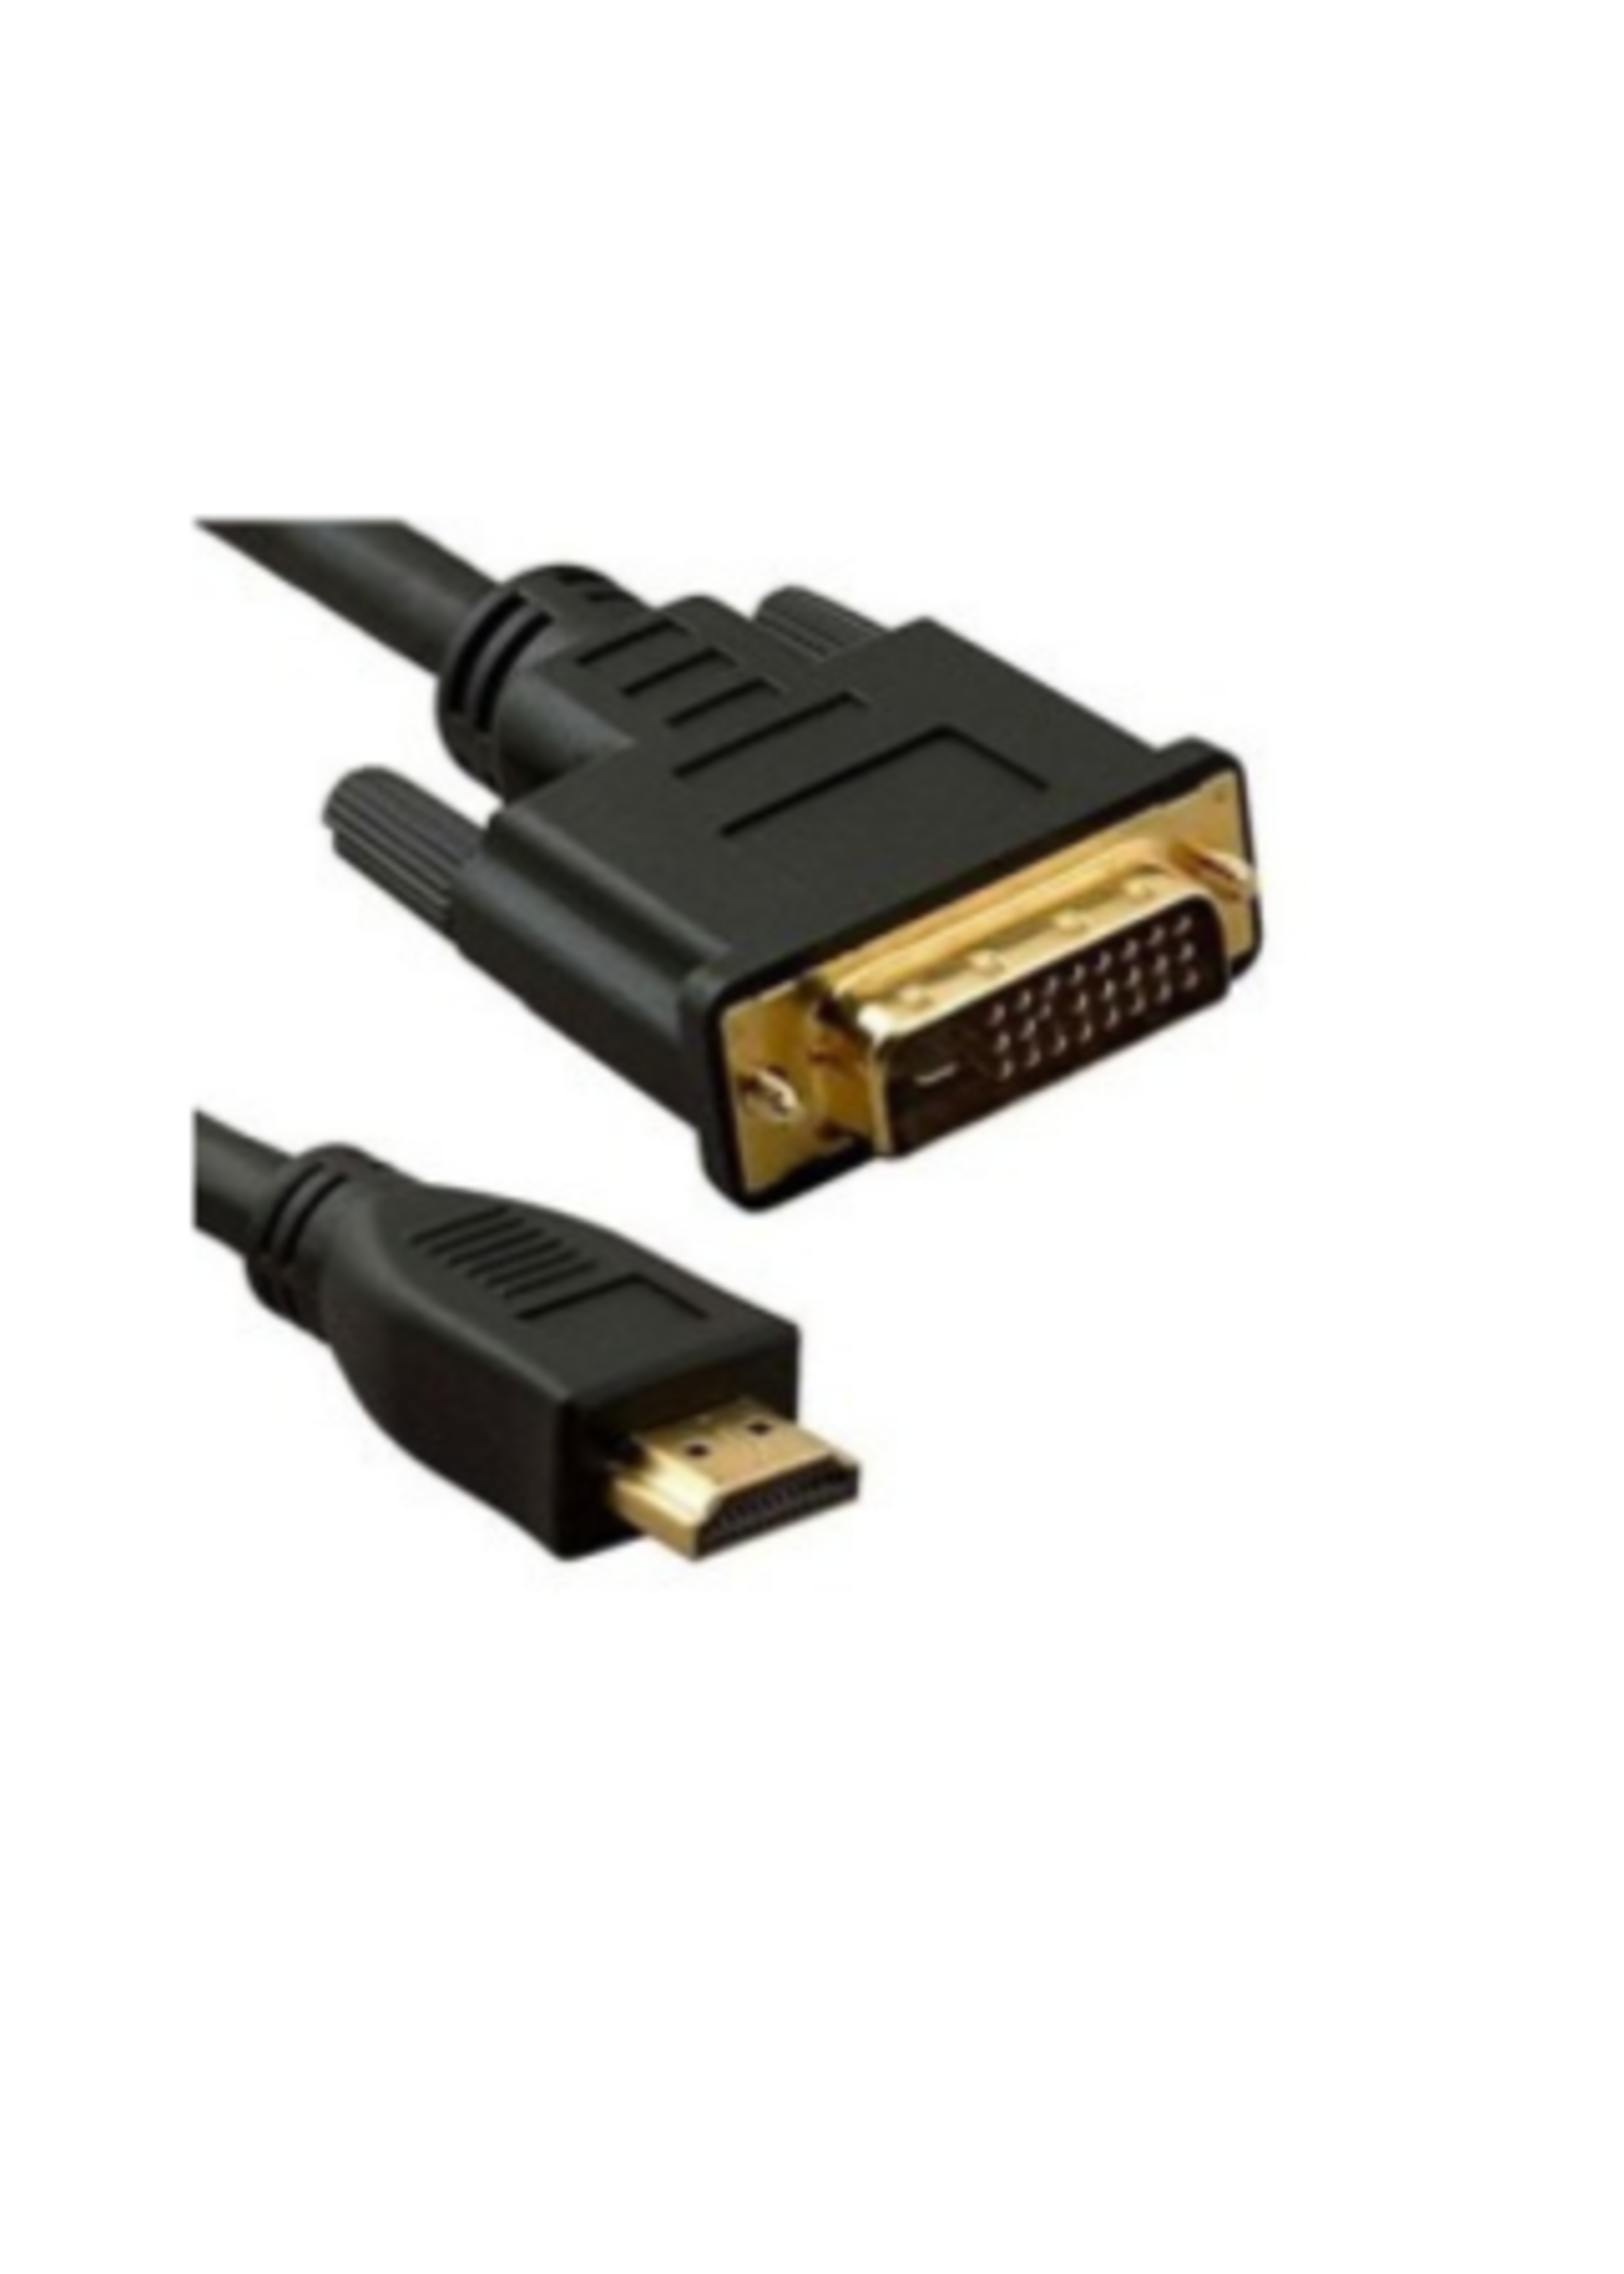 DVI À HDMI CABLE (24 PIN)